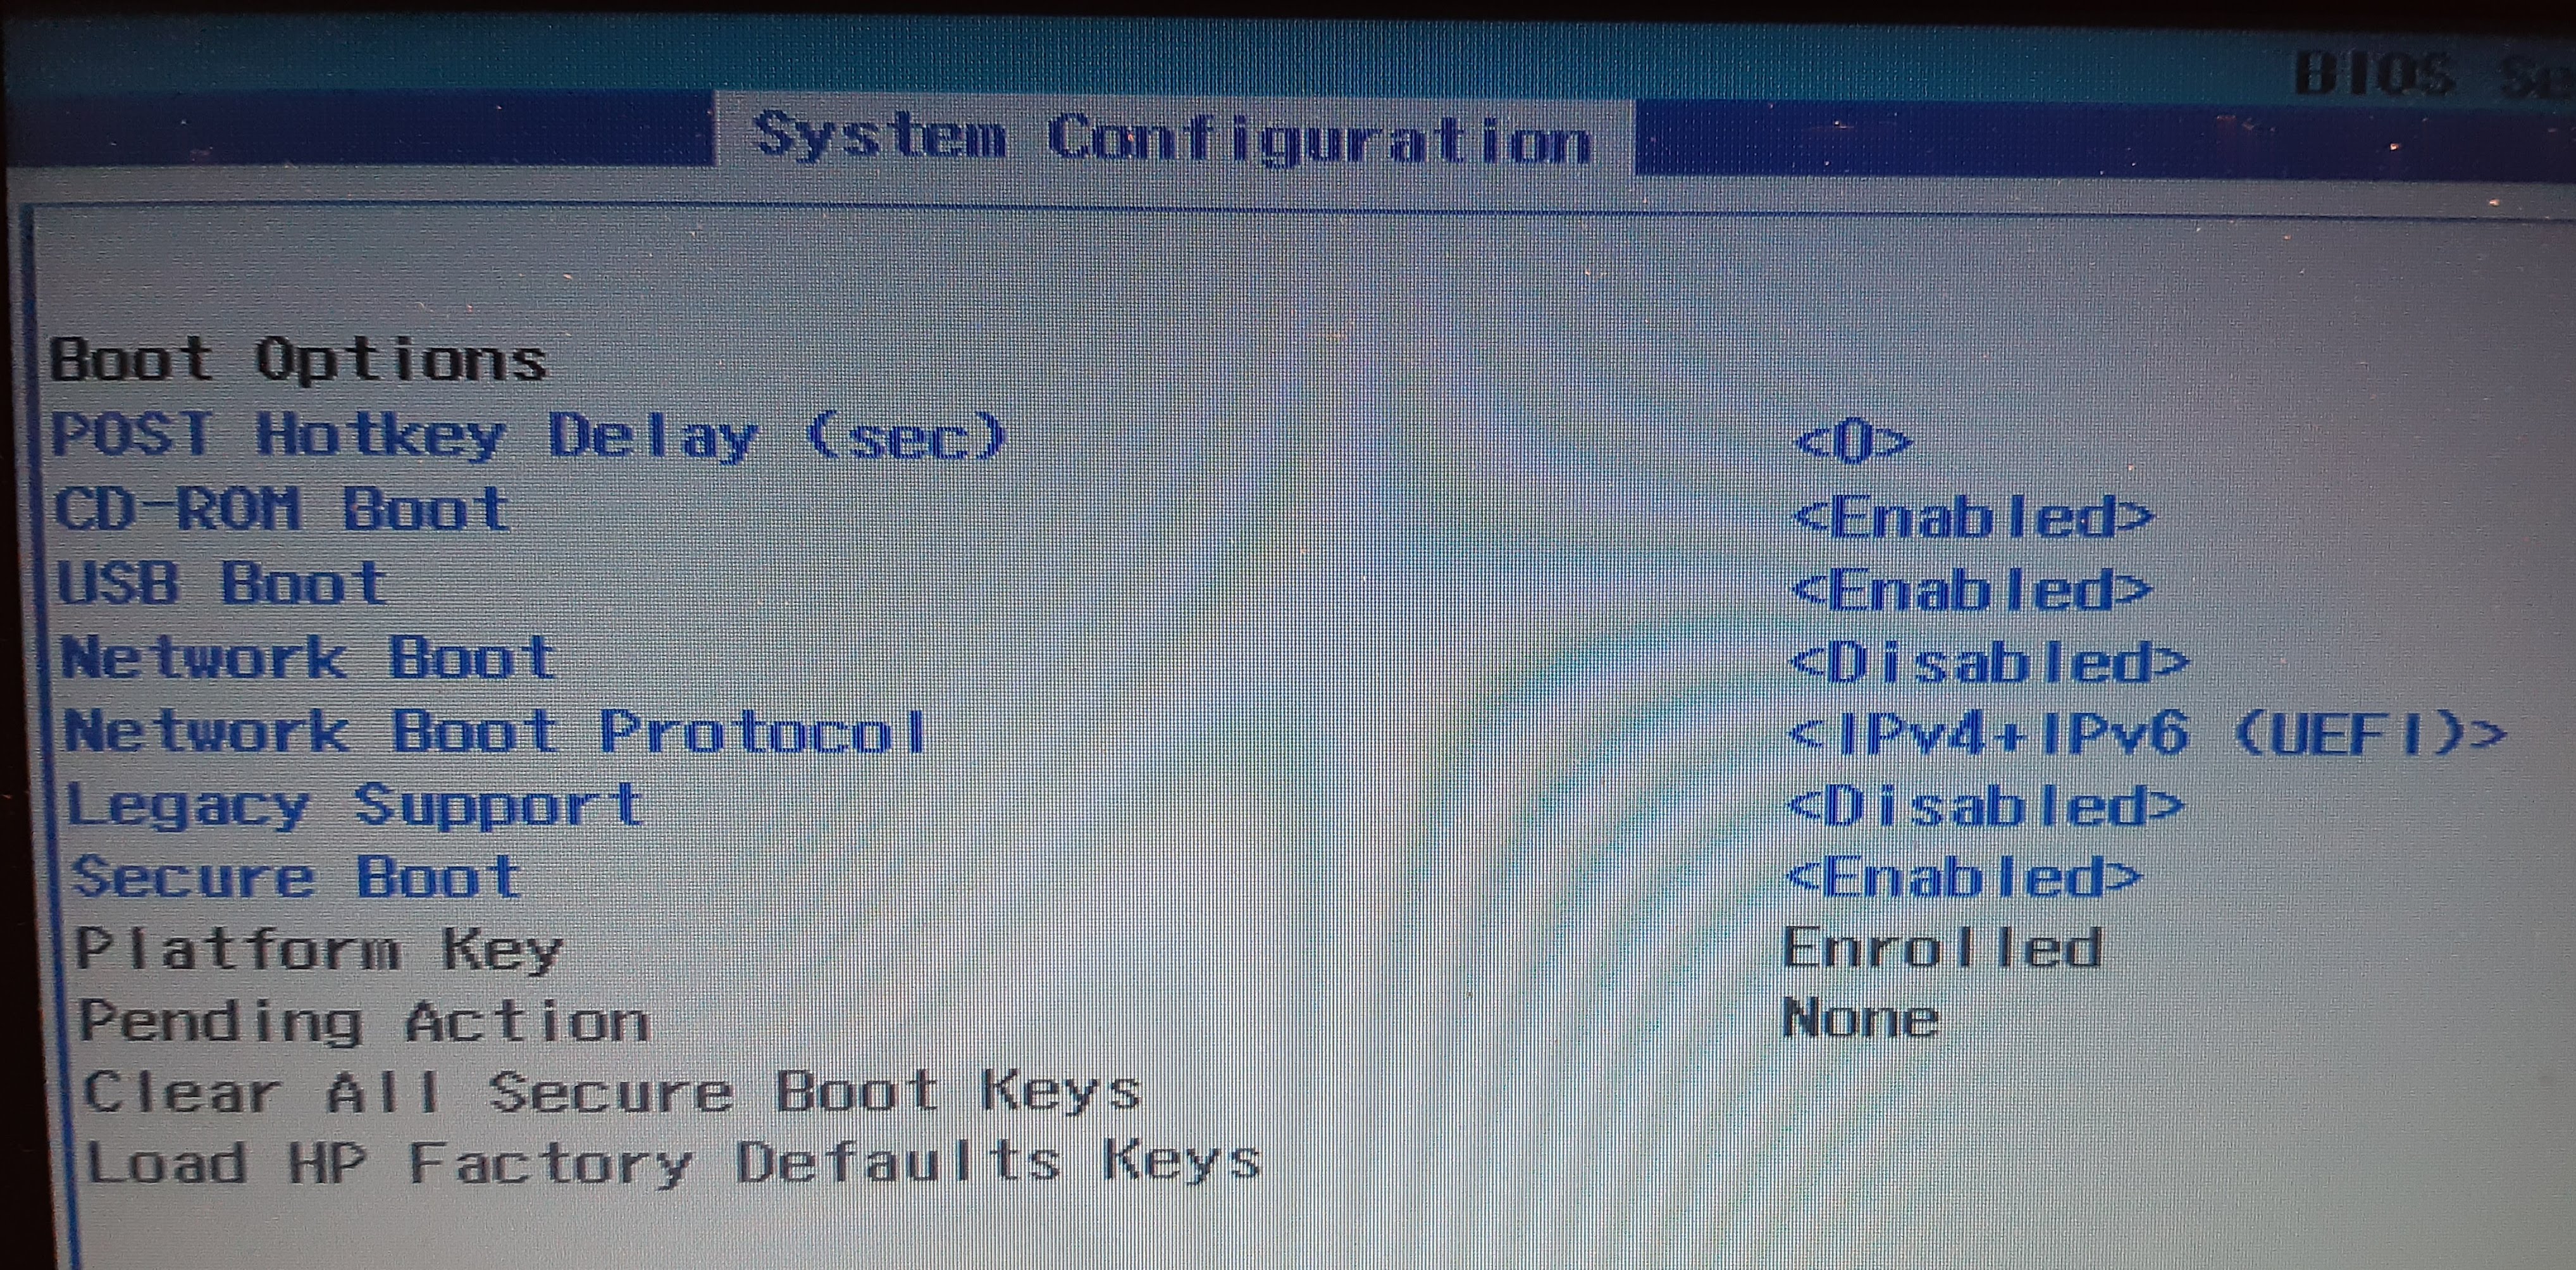 Uefi] Secure boot keys options - HP Support Community - 8595481